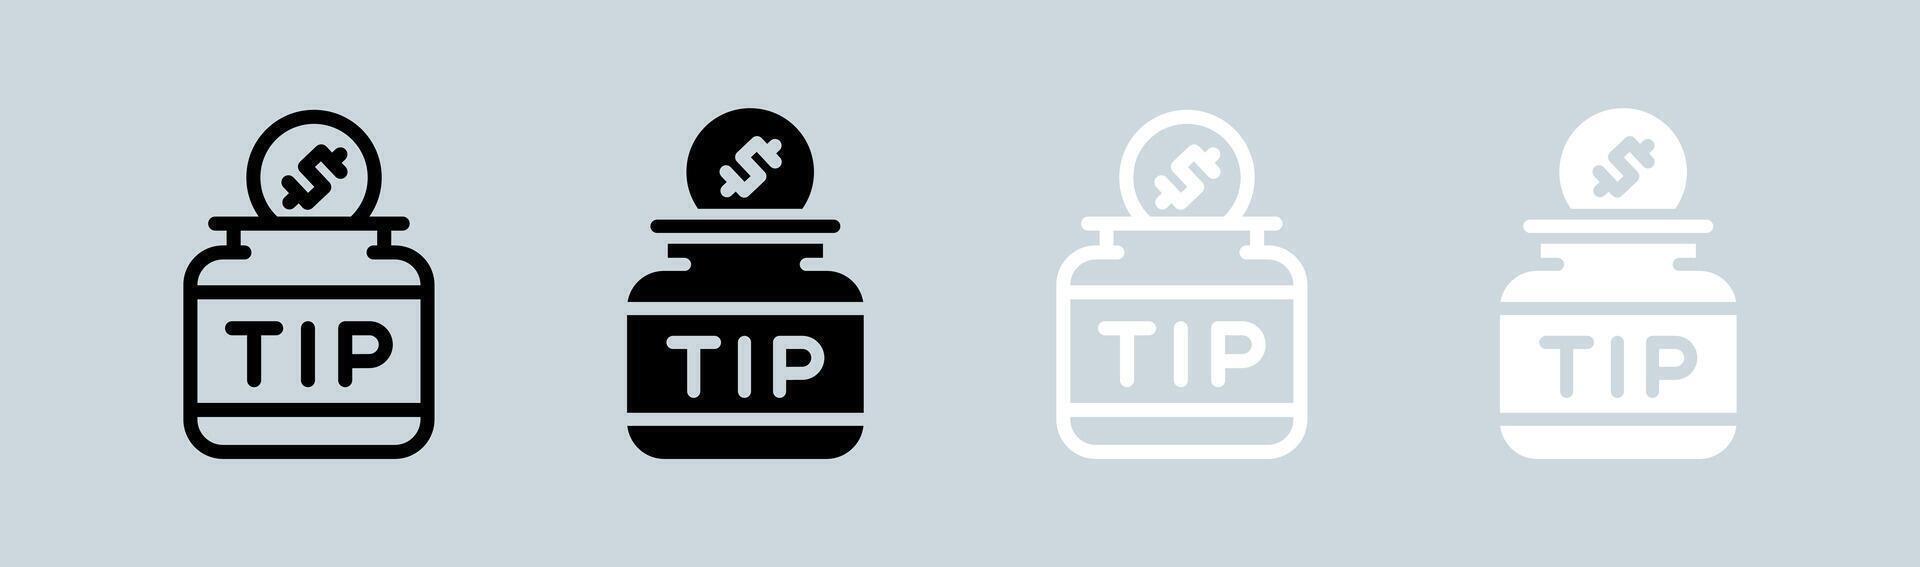 mancia vaso icona impostato nel nero e bianca. moneta segni vettore illustrazione.